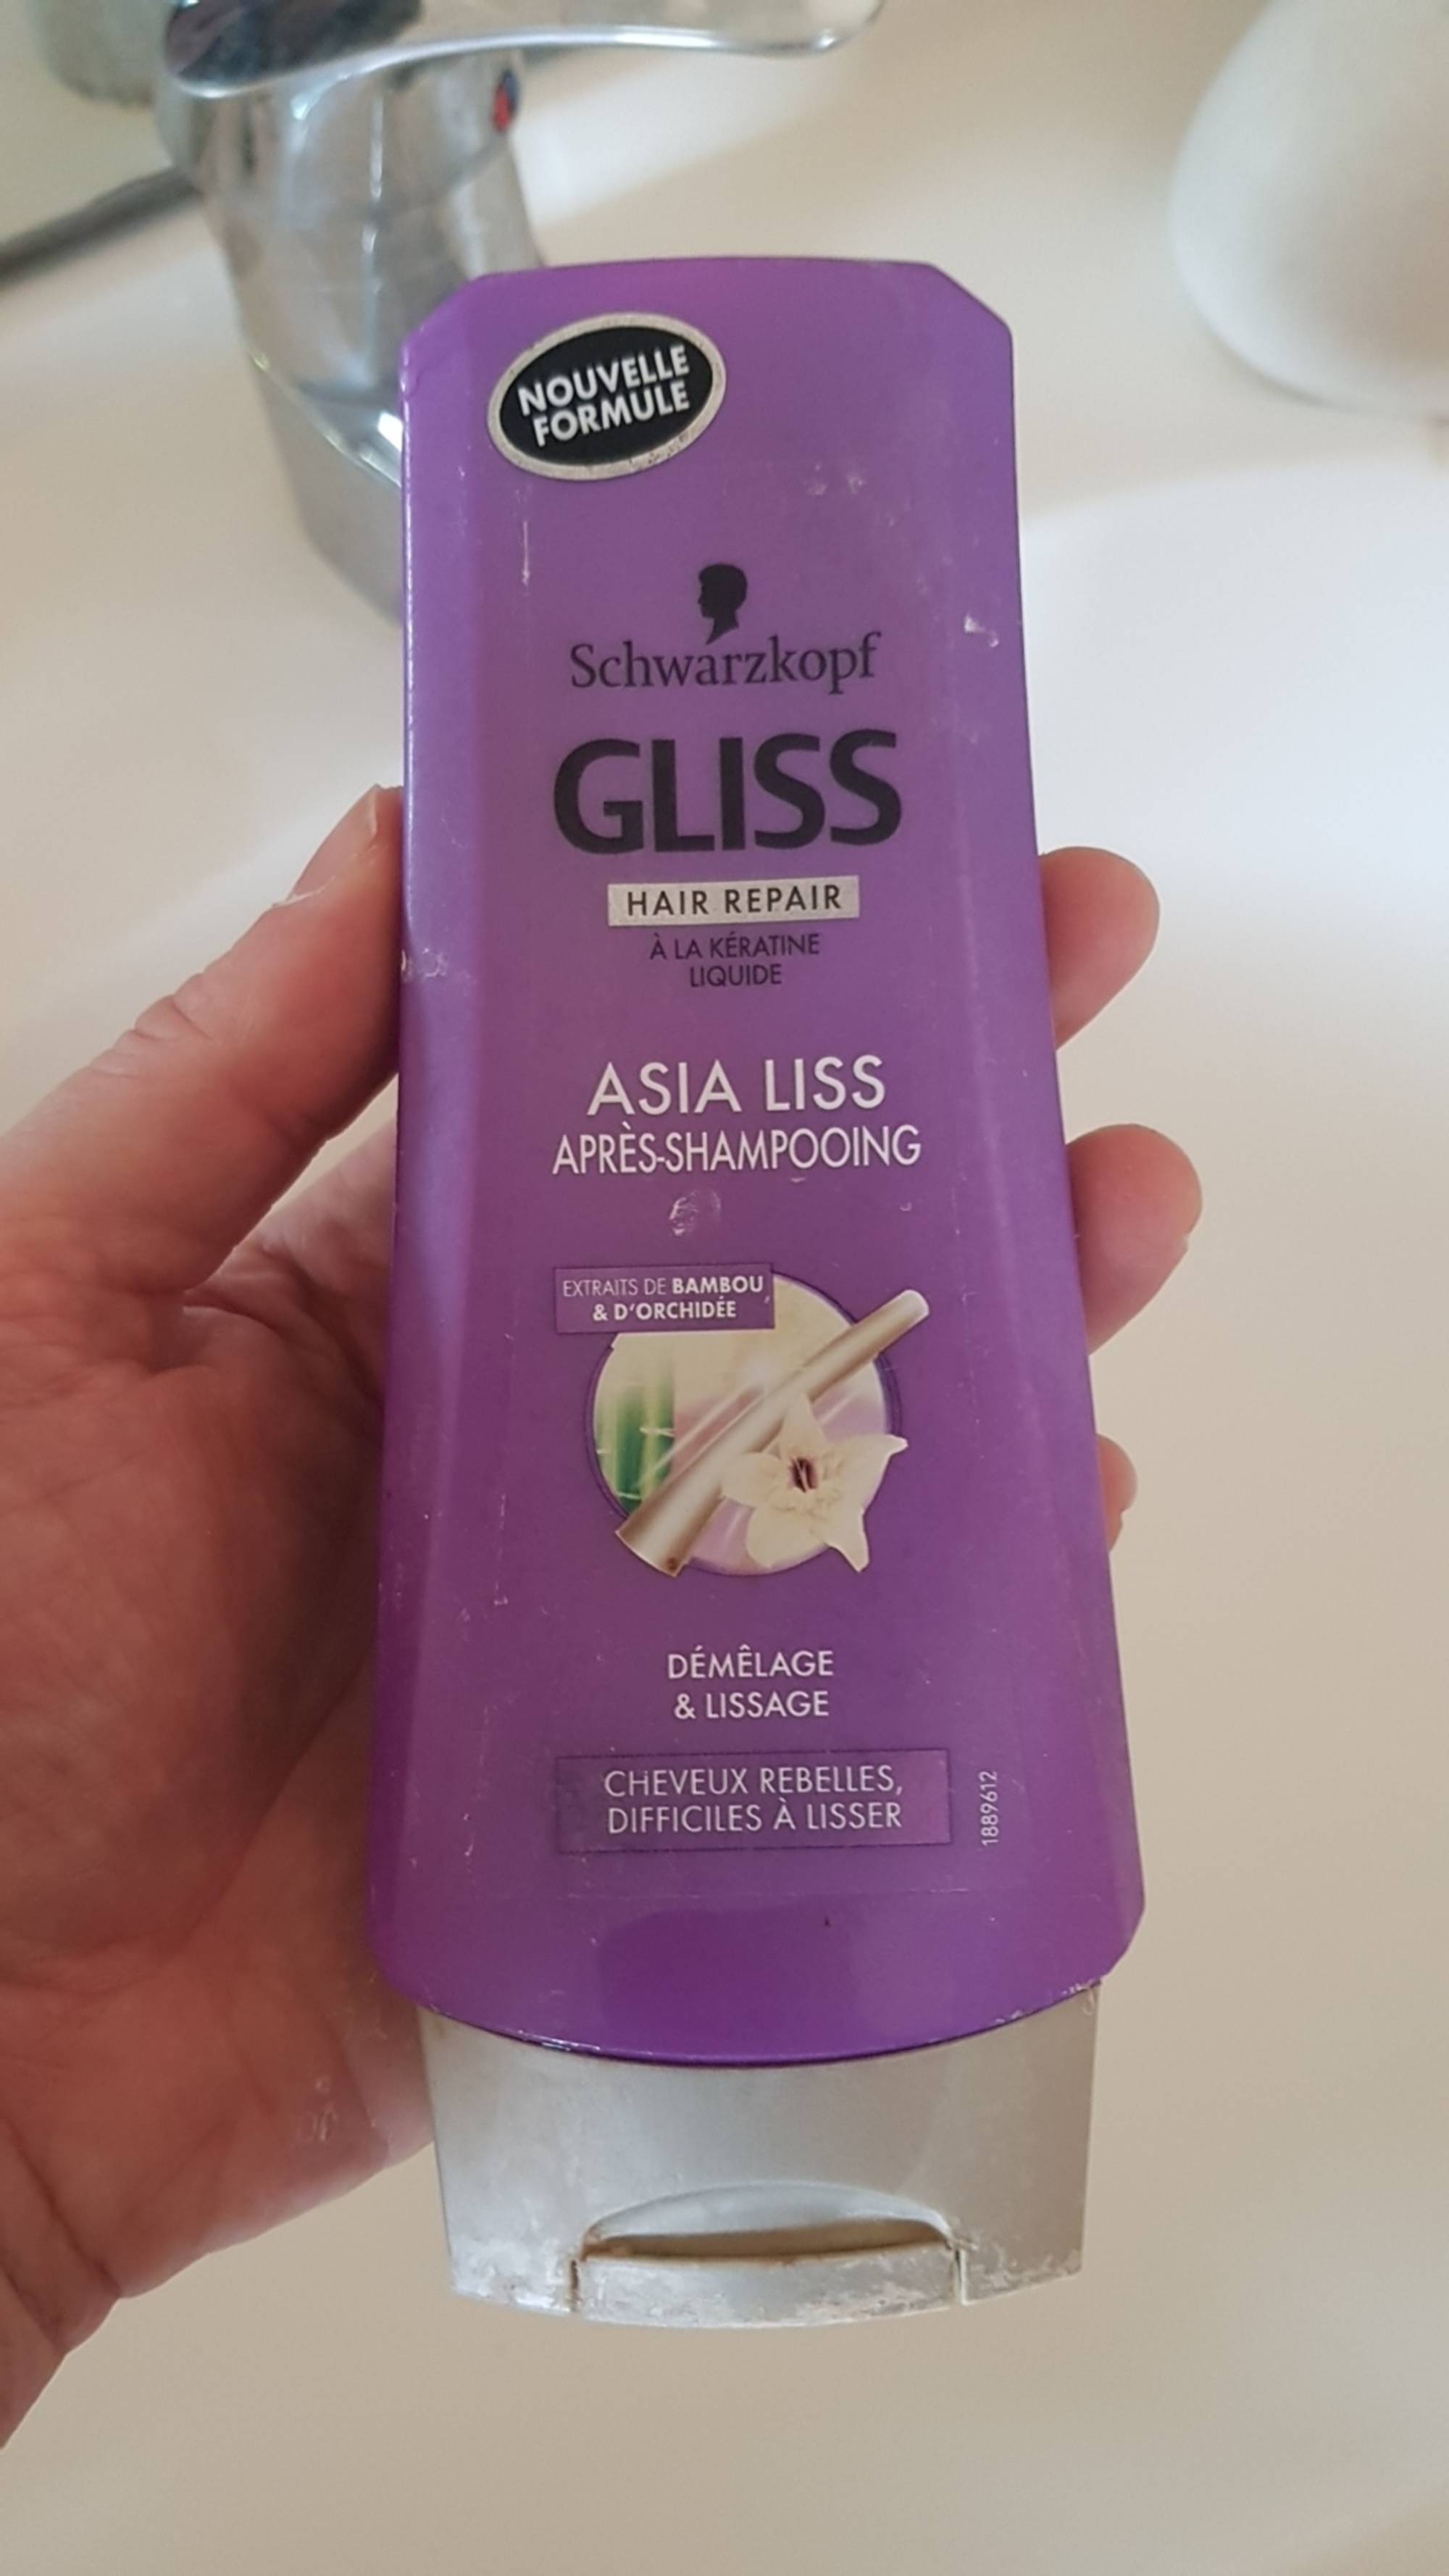 GLISS - Asia liss - Après shampooing